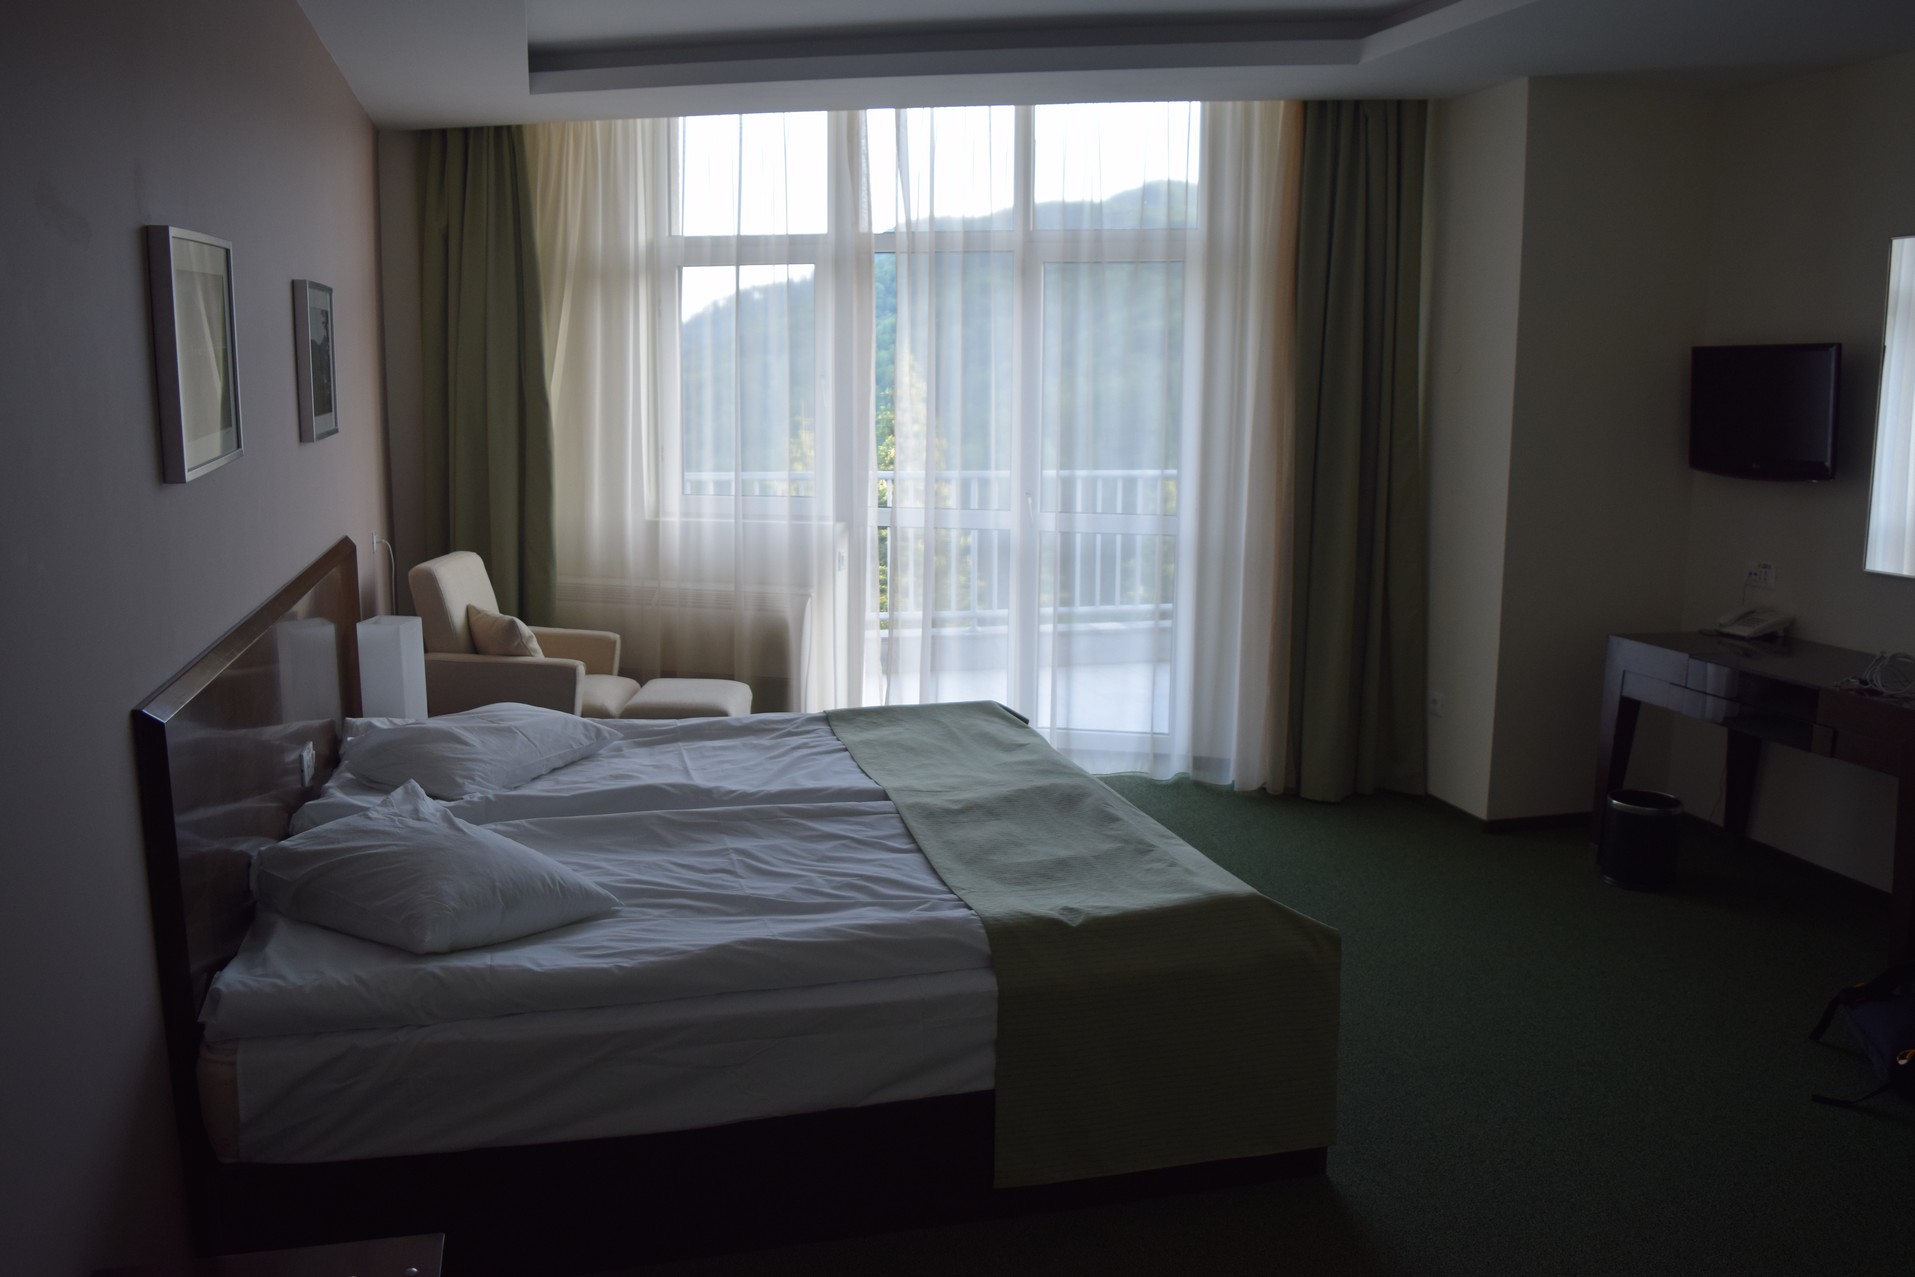 Balvanyos hotel room